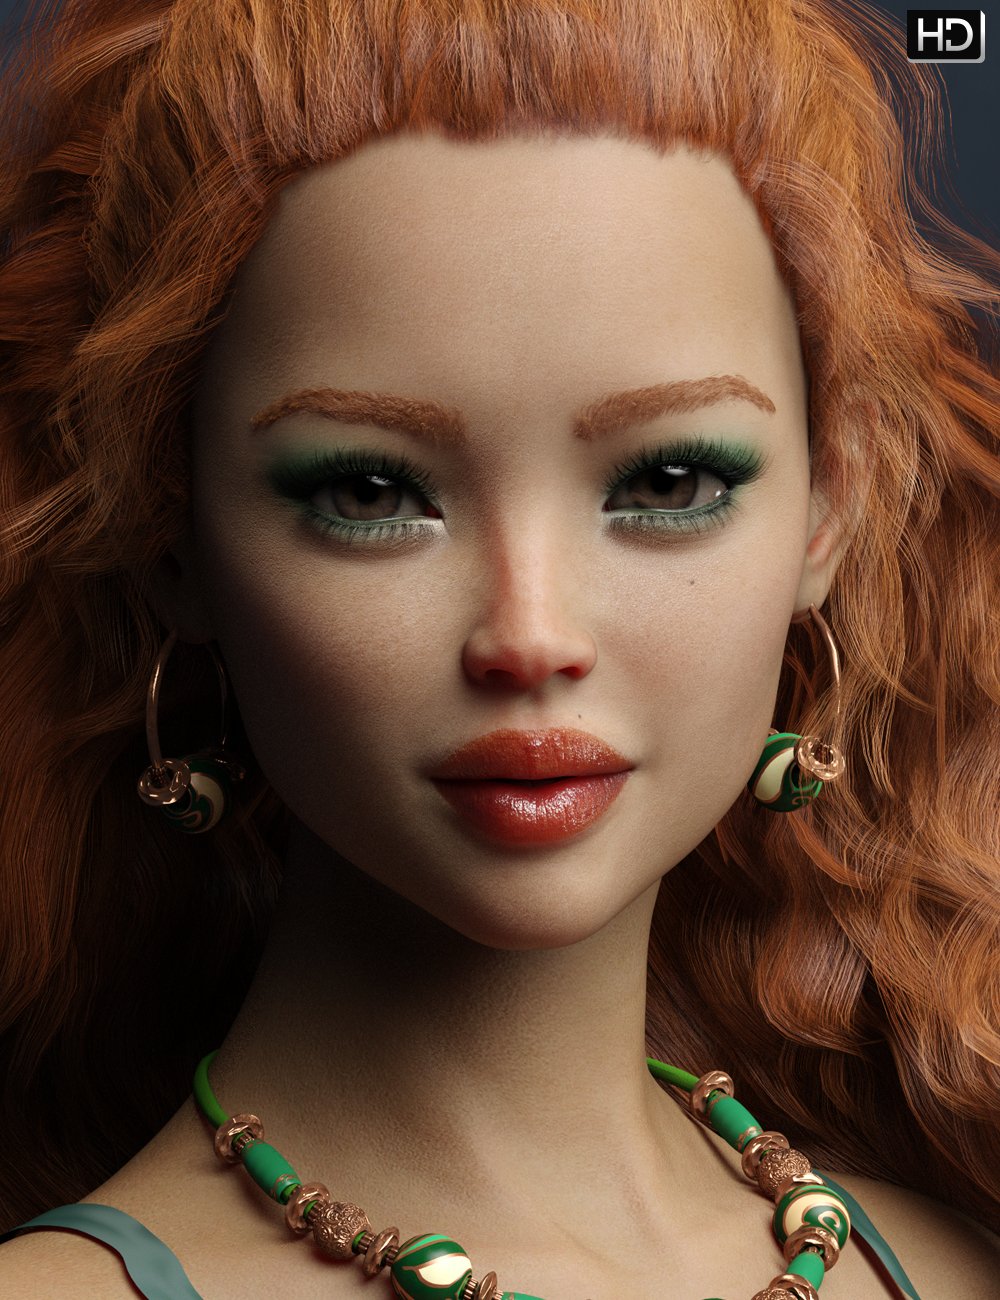 Ava HD for Tika 8 by: Emrys, 3D Models by Daz 3D